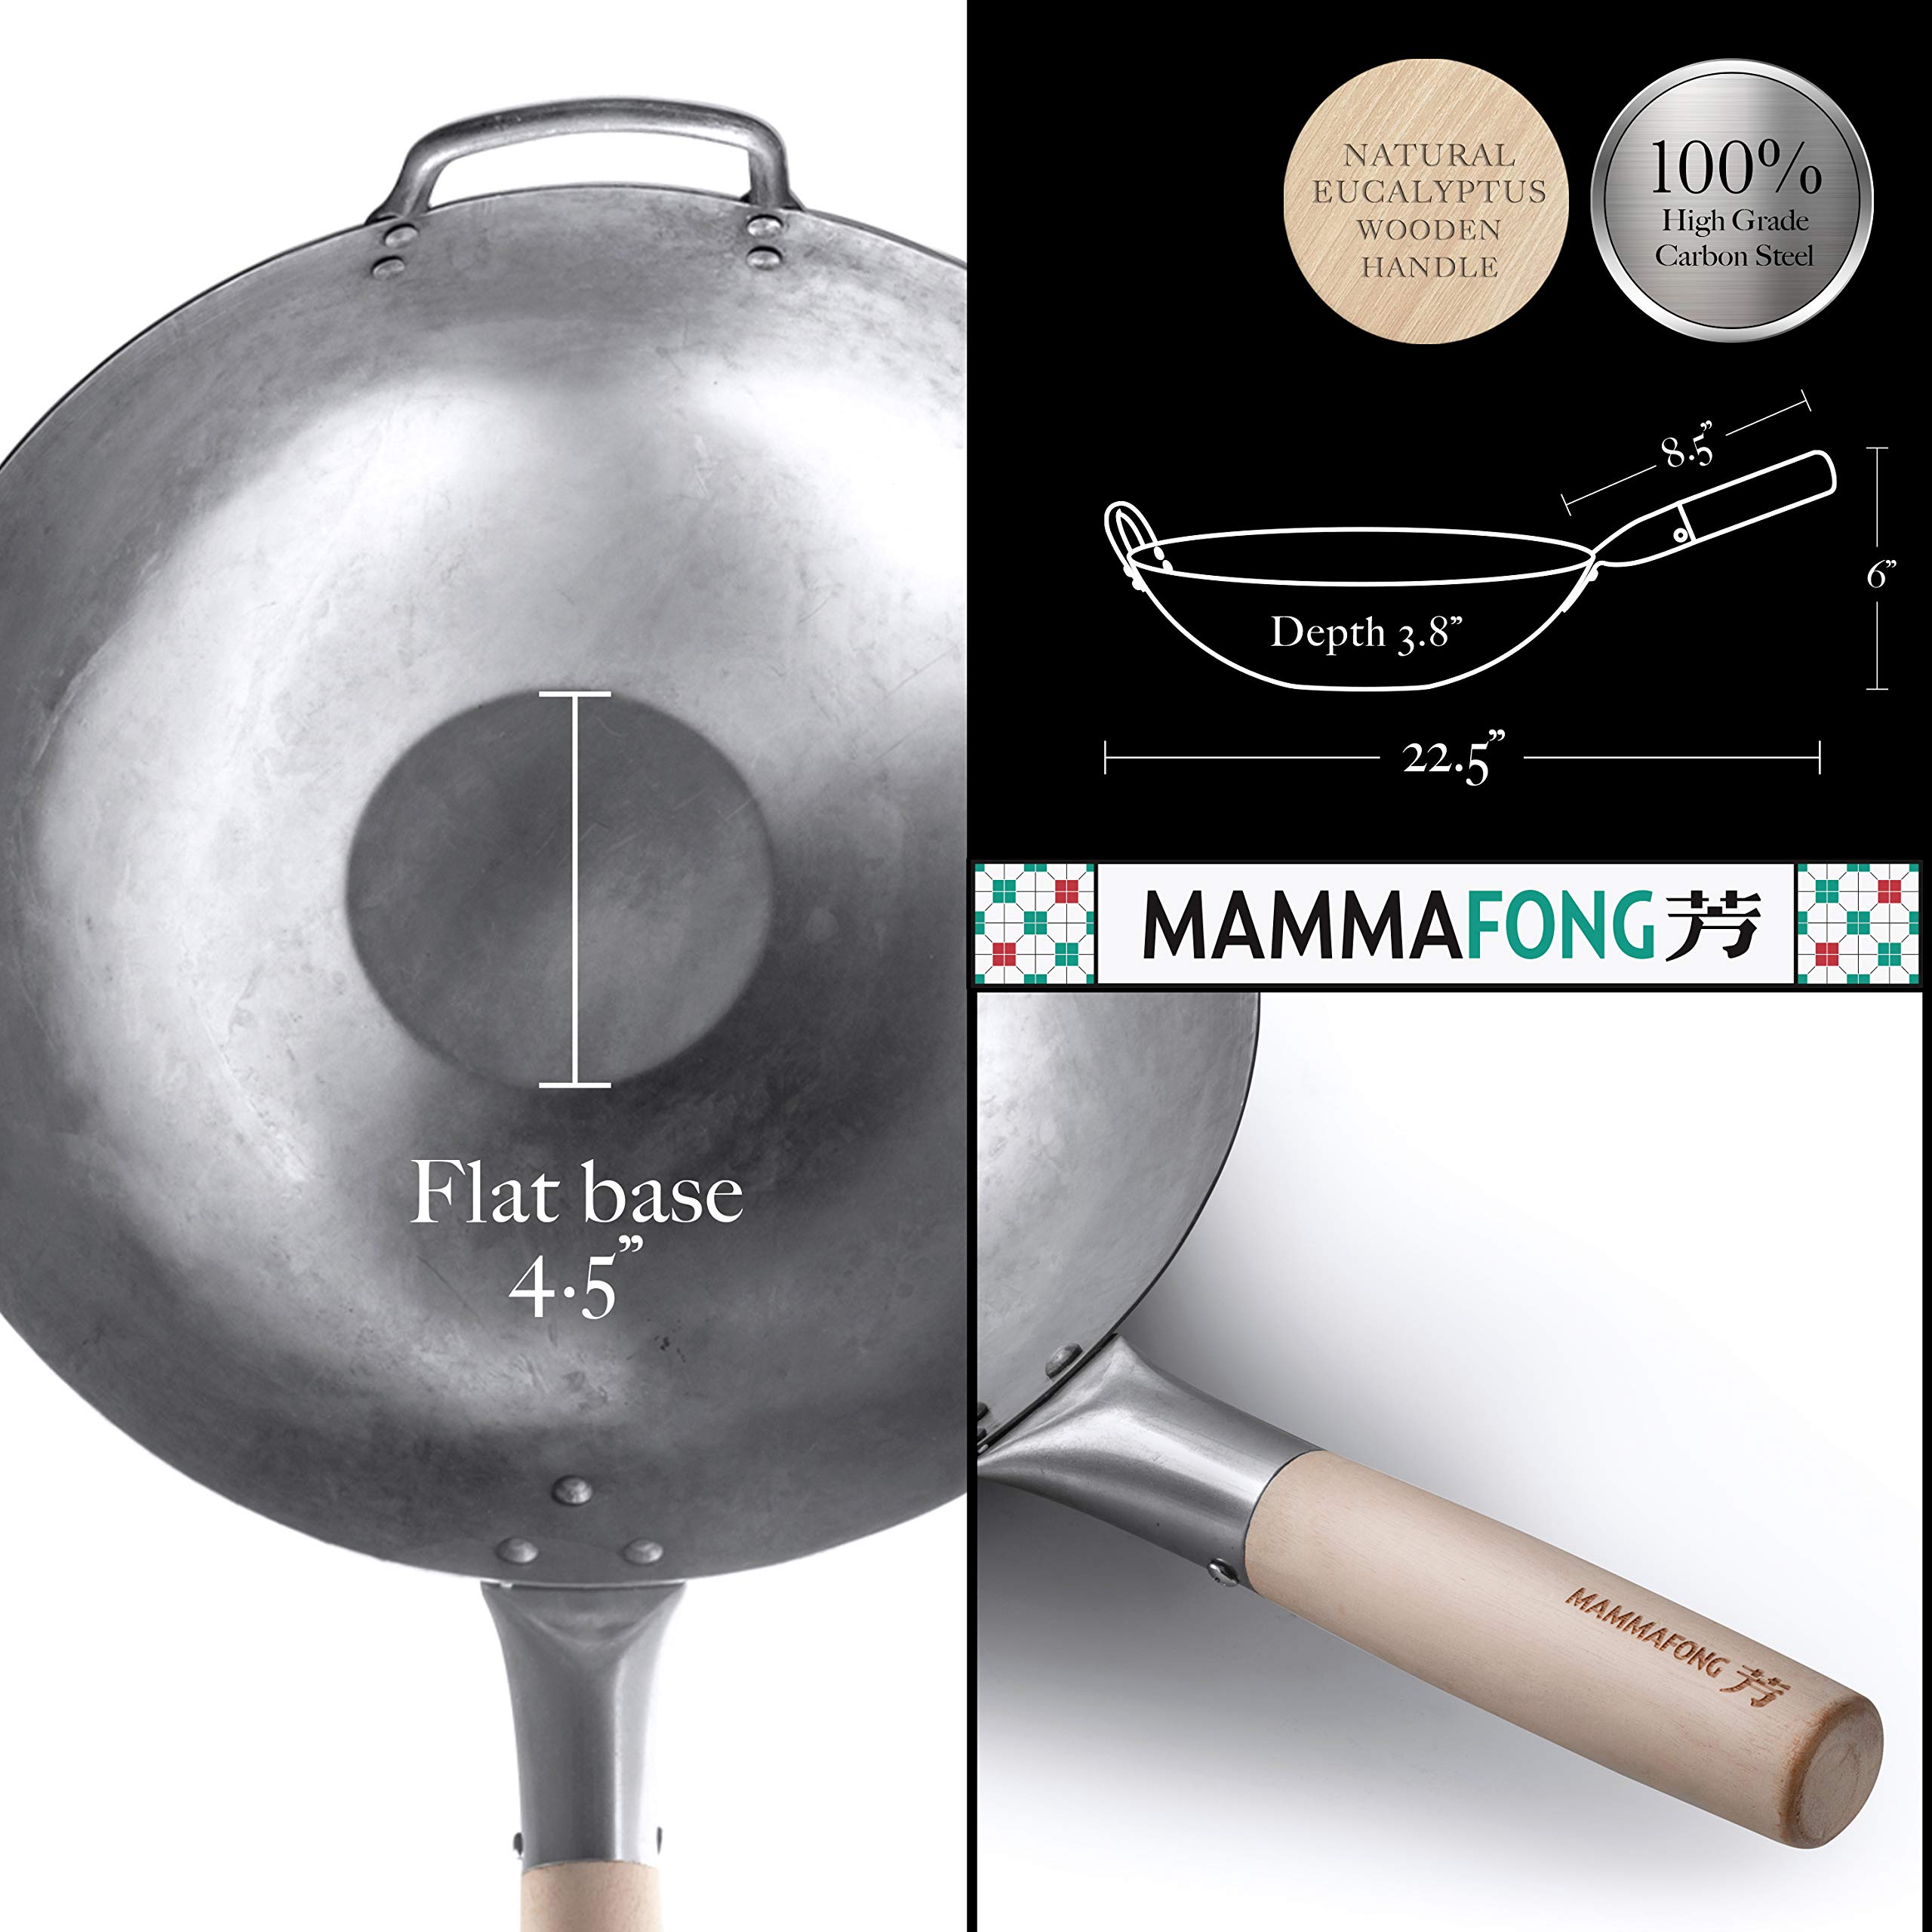 Mammafong Flat Bottom Carbon Steel Wok Pan - Authentic Hand Hammered Woks and Stir Fry Pans - 14" Pow Wok